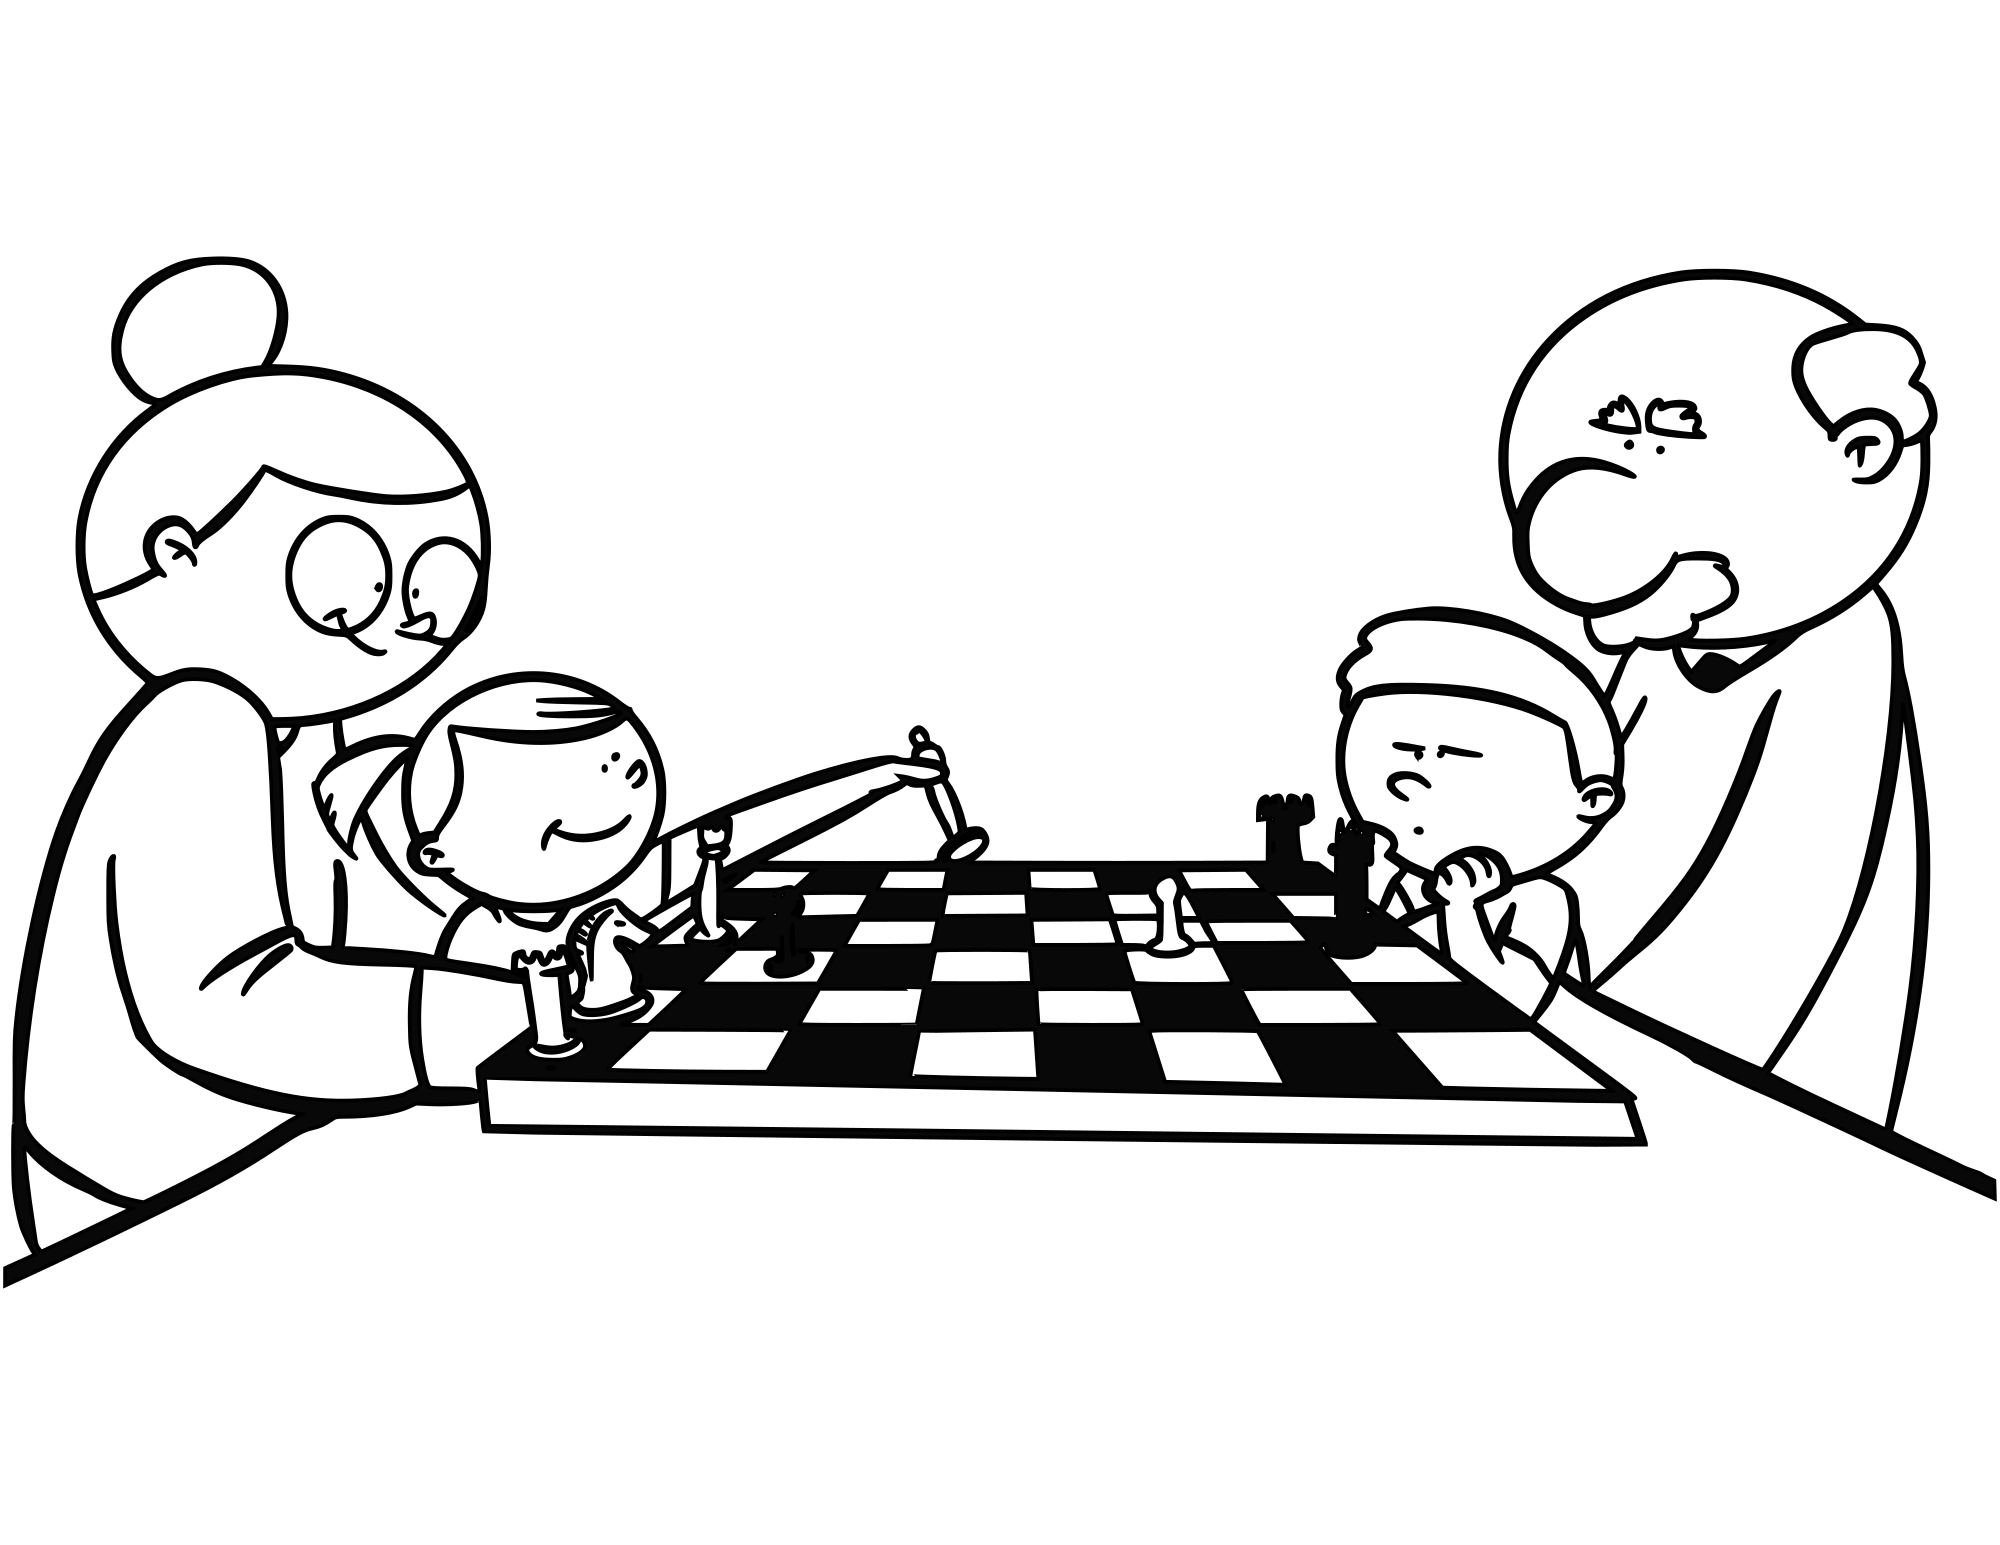 Chess coloring book / Dibujo Ajedrez para colorear -8- - Openclipart